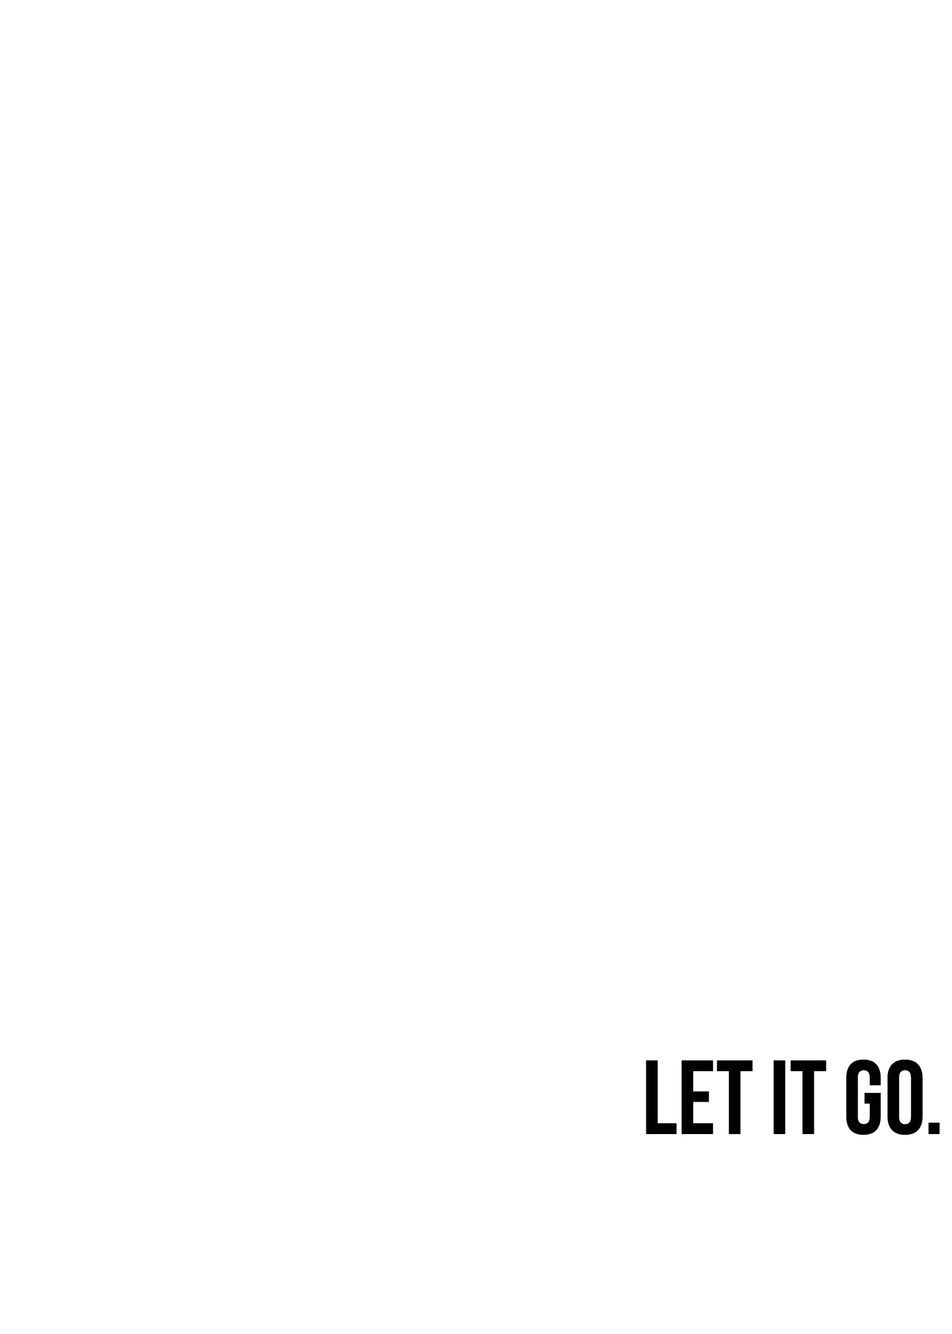 let it go' home screen. Go wallpaper, Homescreen, Letting go